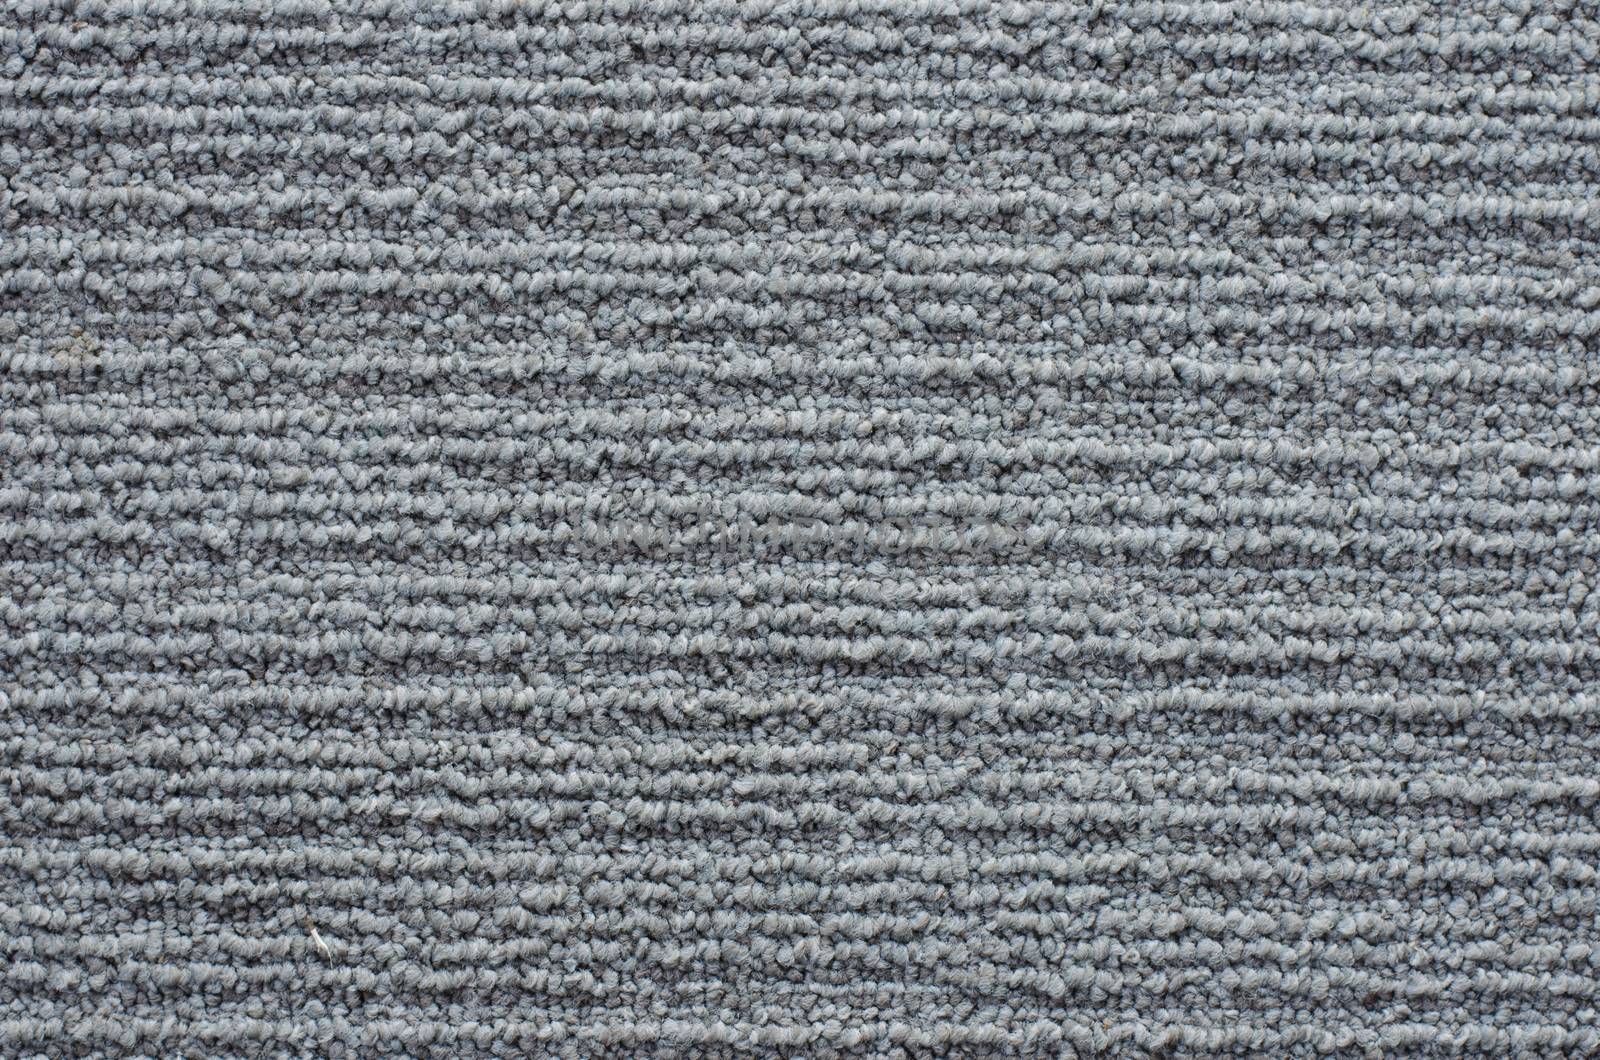 carpet  texture background by photobyphotoboy